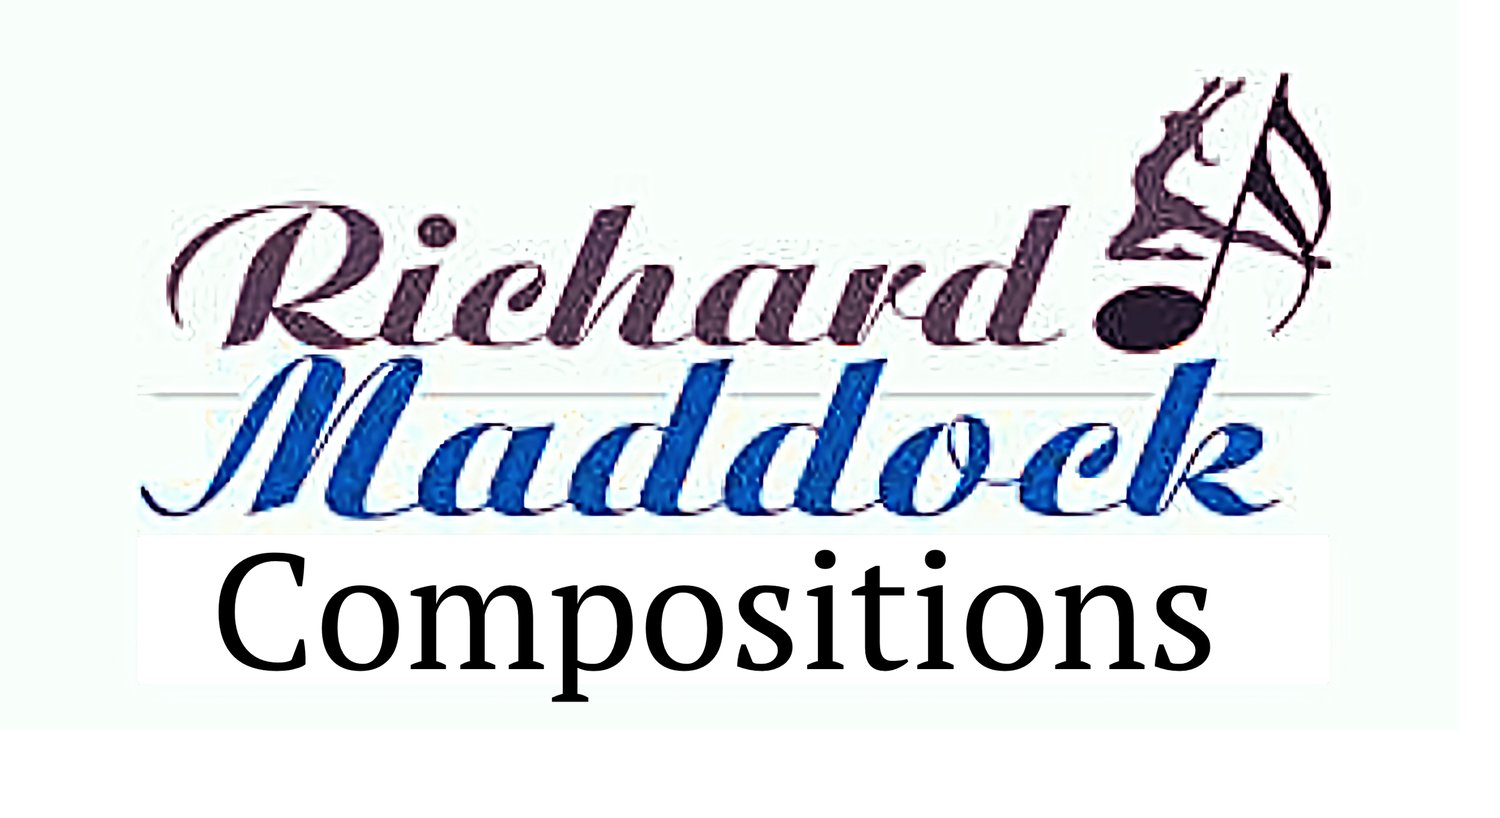 RICHARD MADDOCK 